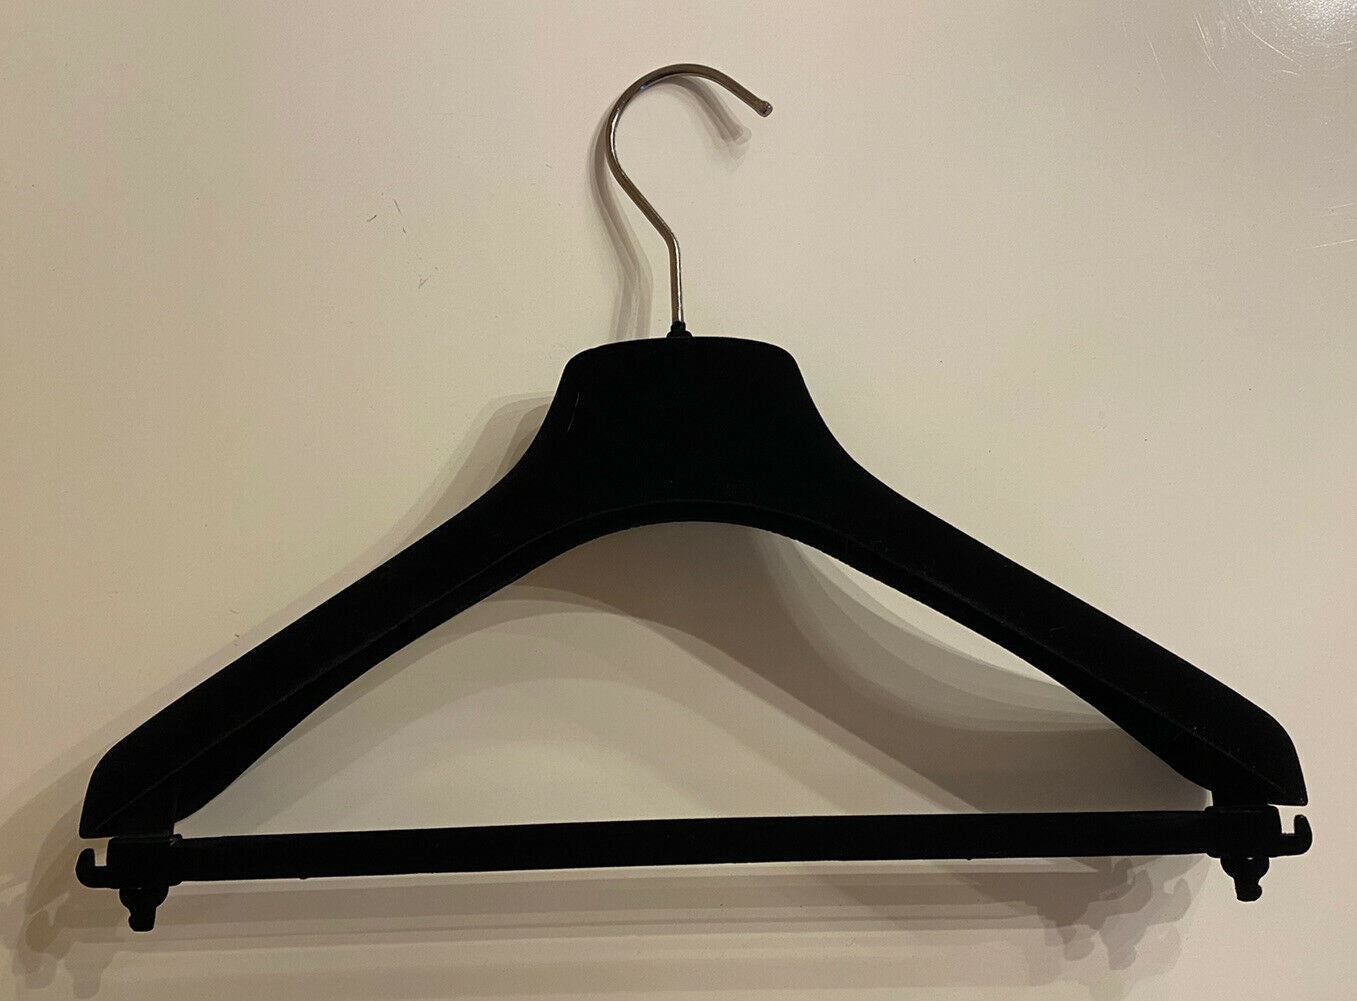 VERSACE Black Velvet Sweater Dress Pants Hanger with Silver Hardware 14.25x6